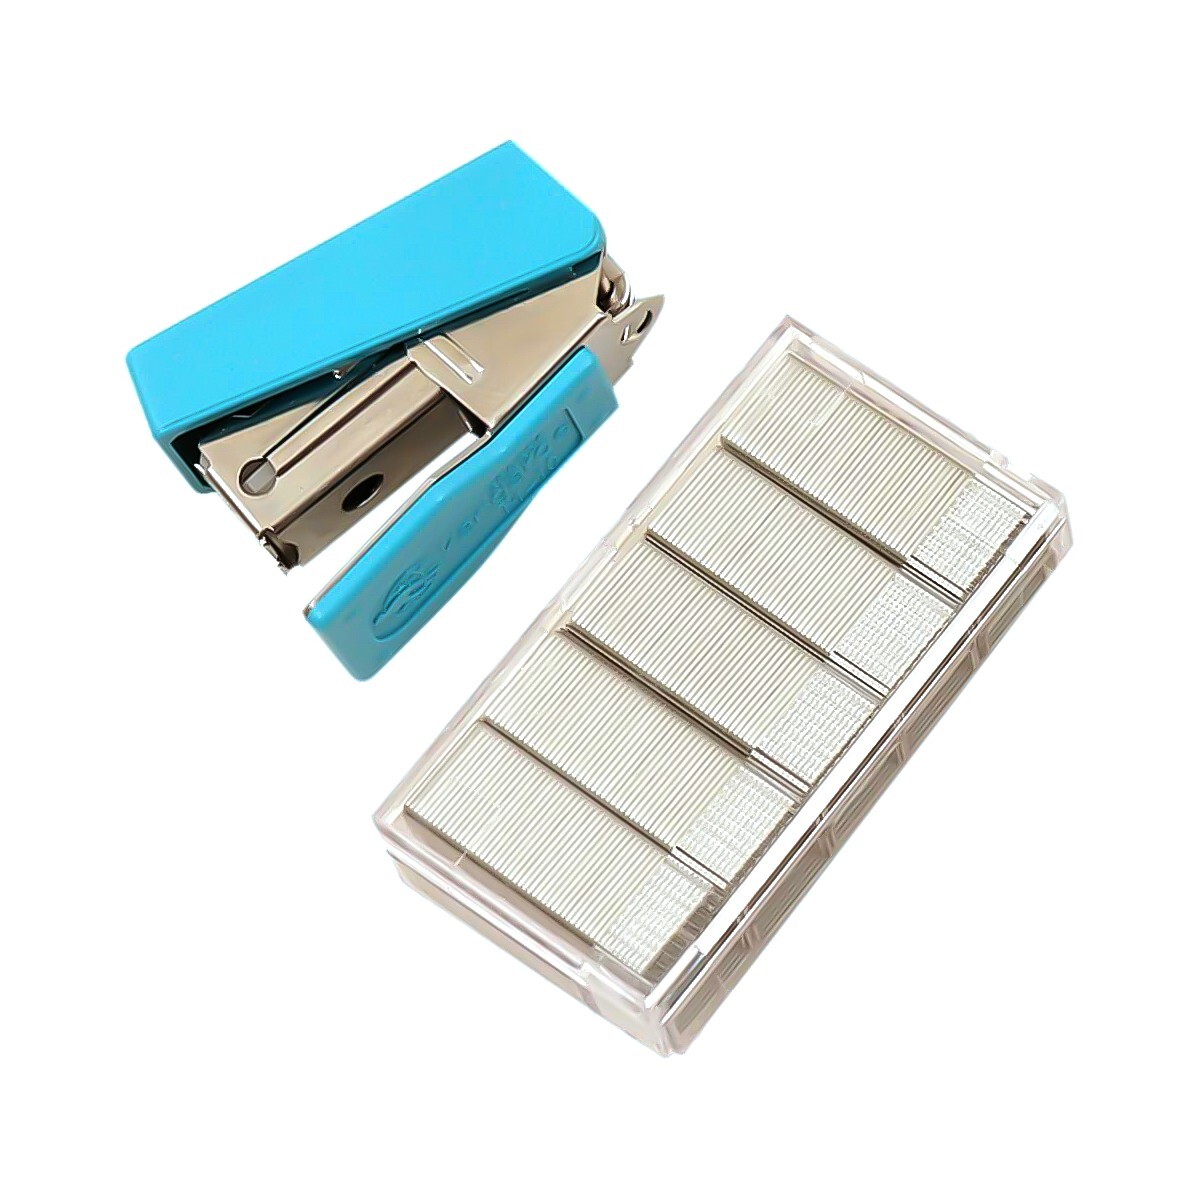 Kangaro Mini Stapler+Pin No:10-M-10/Y2 Assorted Colour